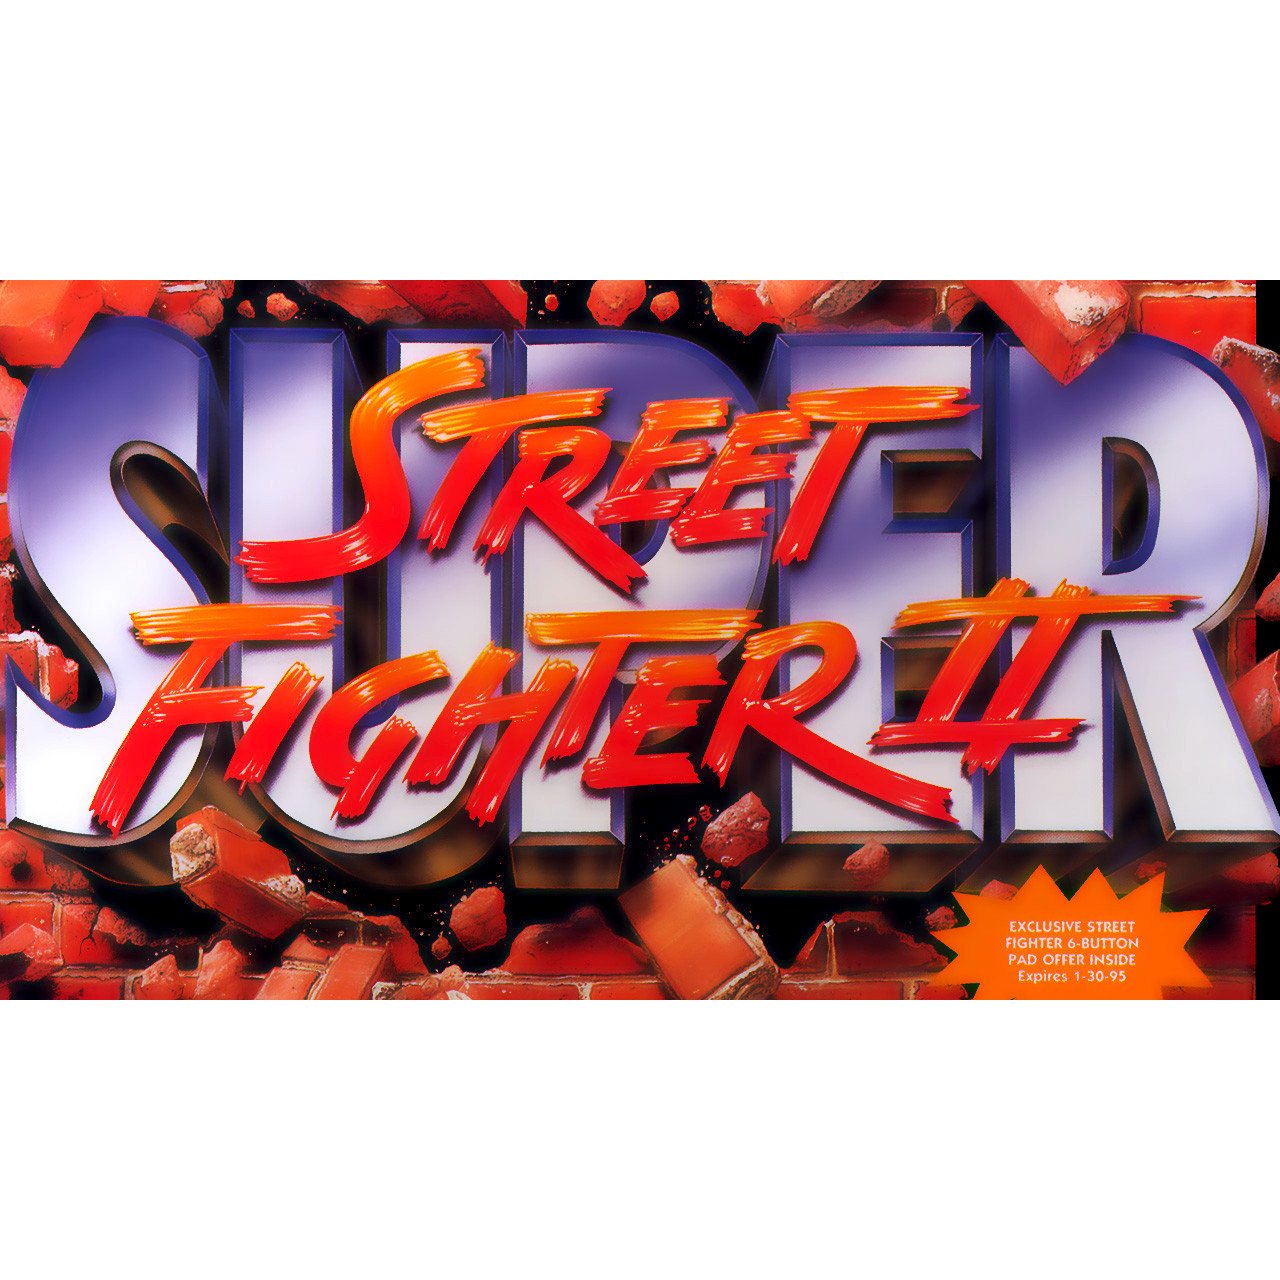 Super Street Fighter II SNES Super Nintendo Game